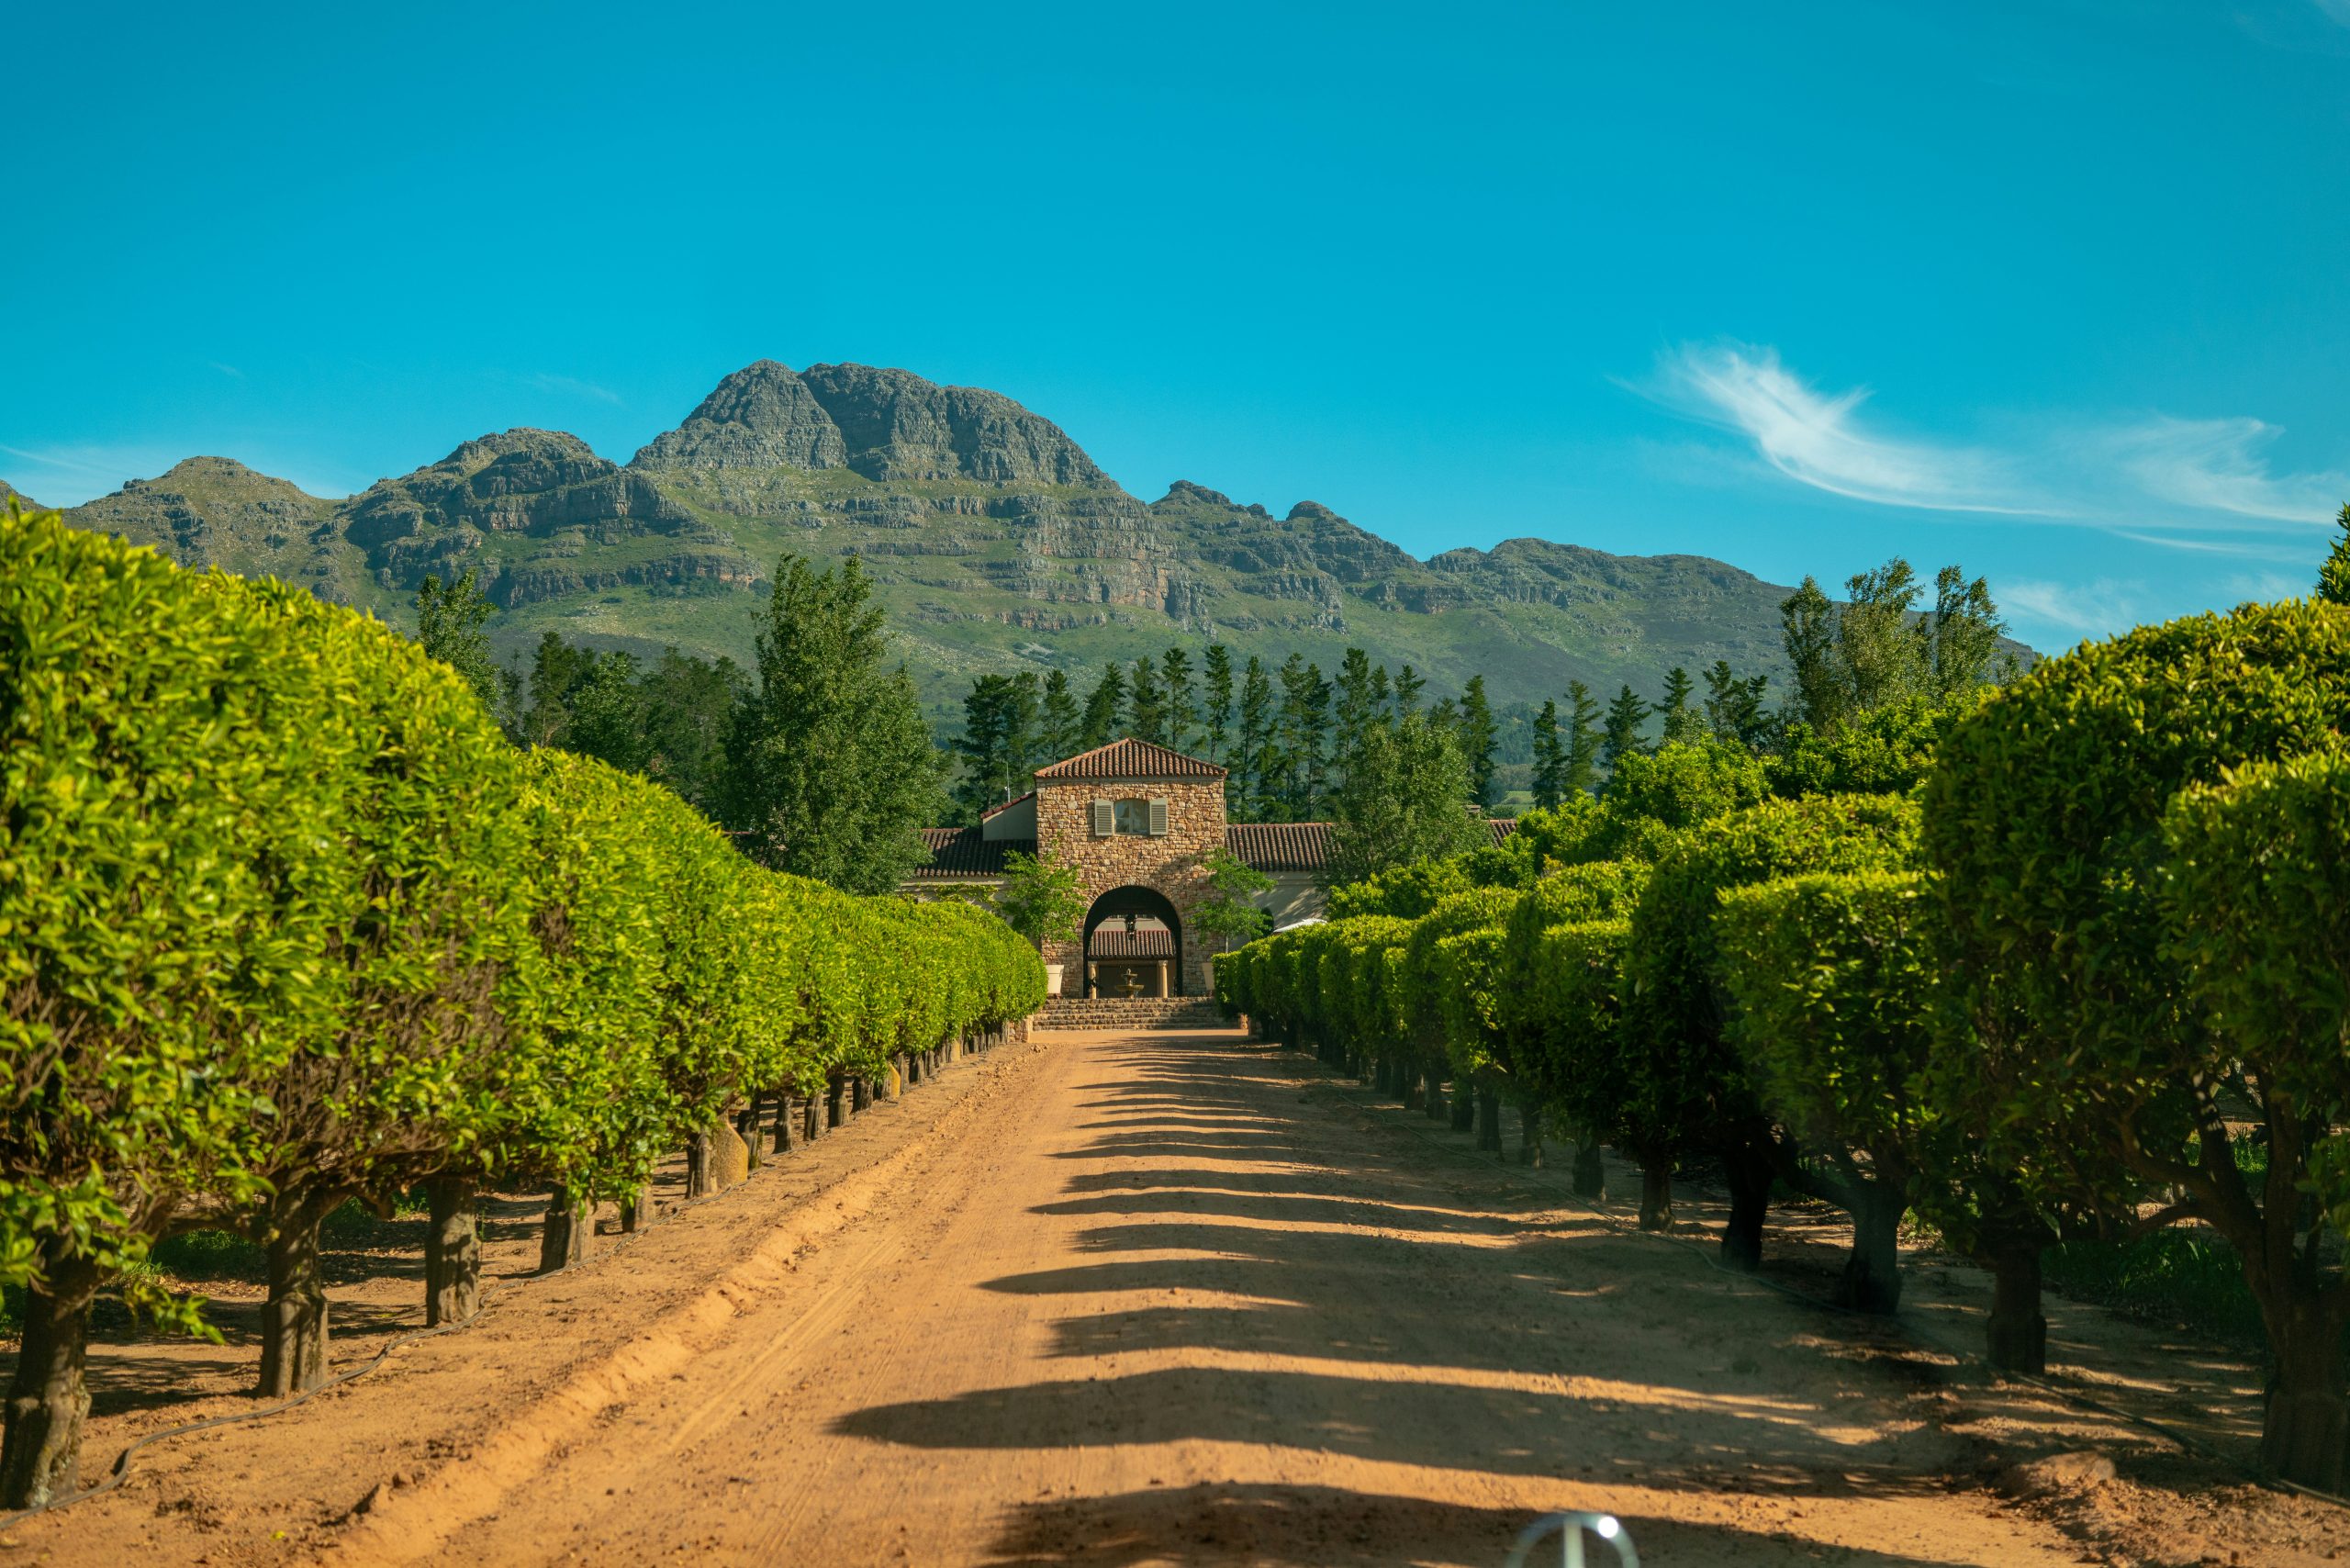 The beautiful entrance to a popular wine farm in Stellenbosch